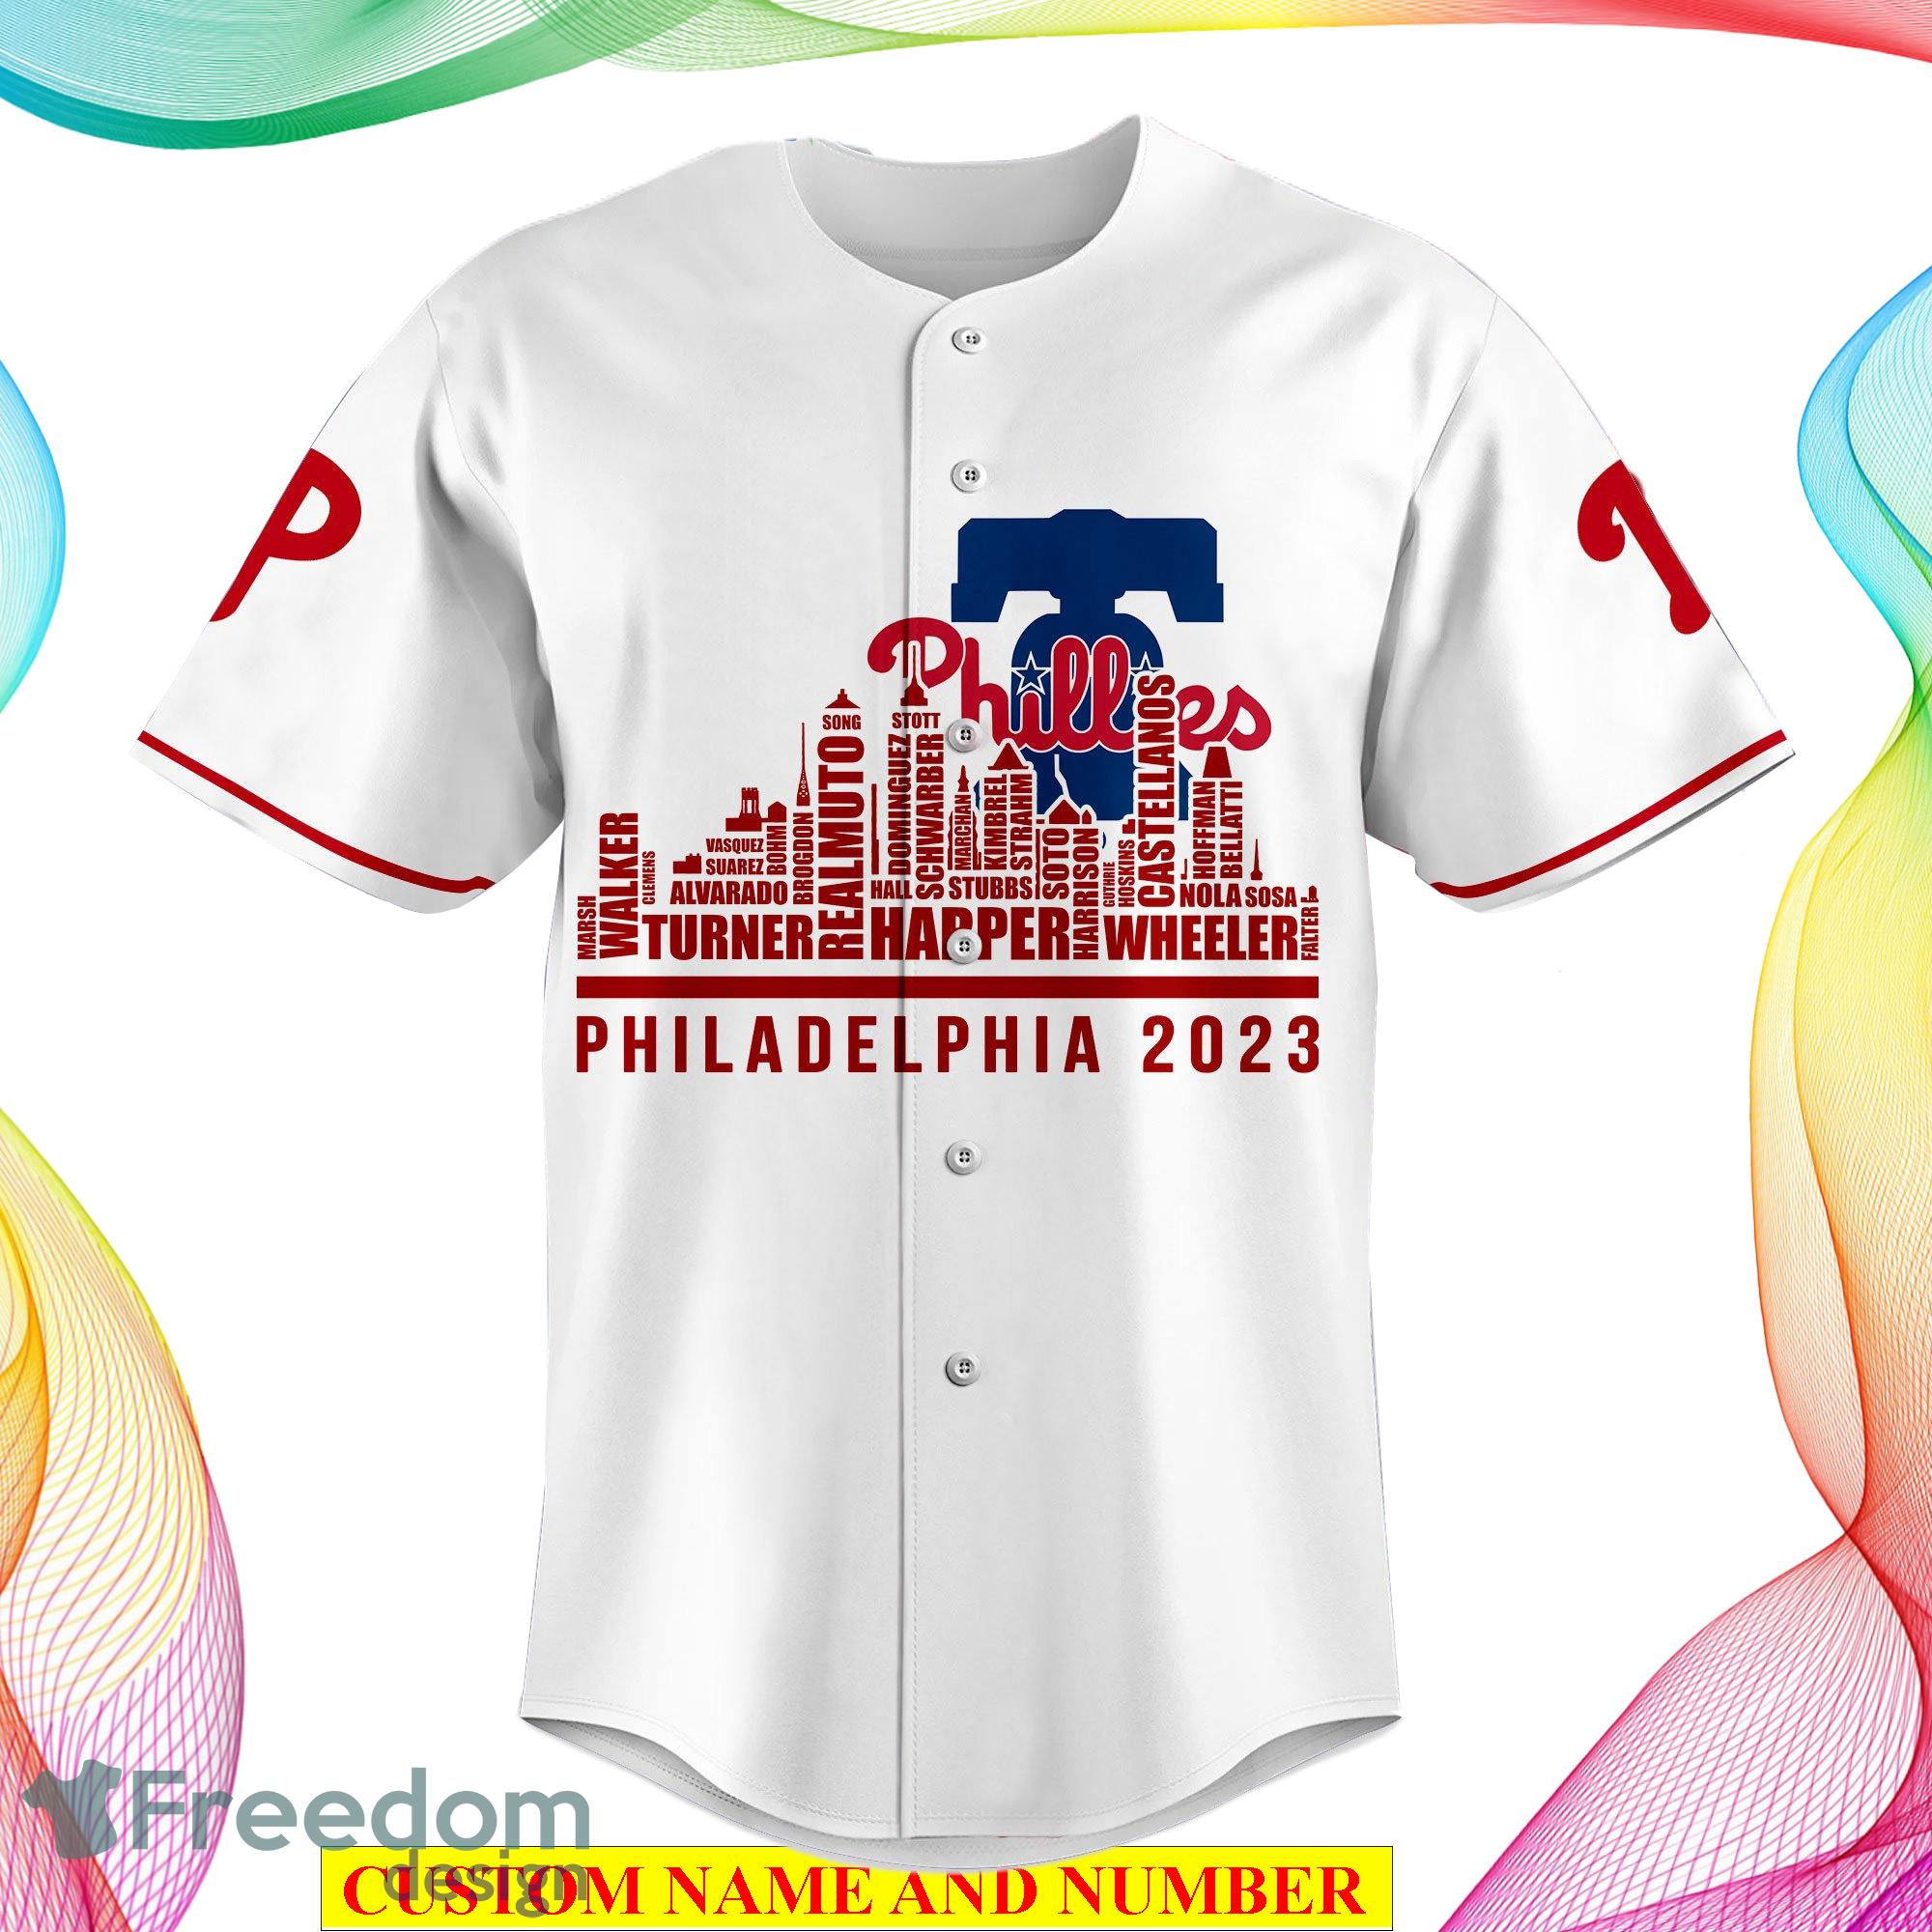 phillies custom jersey